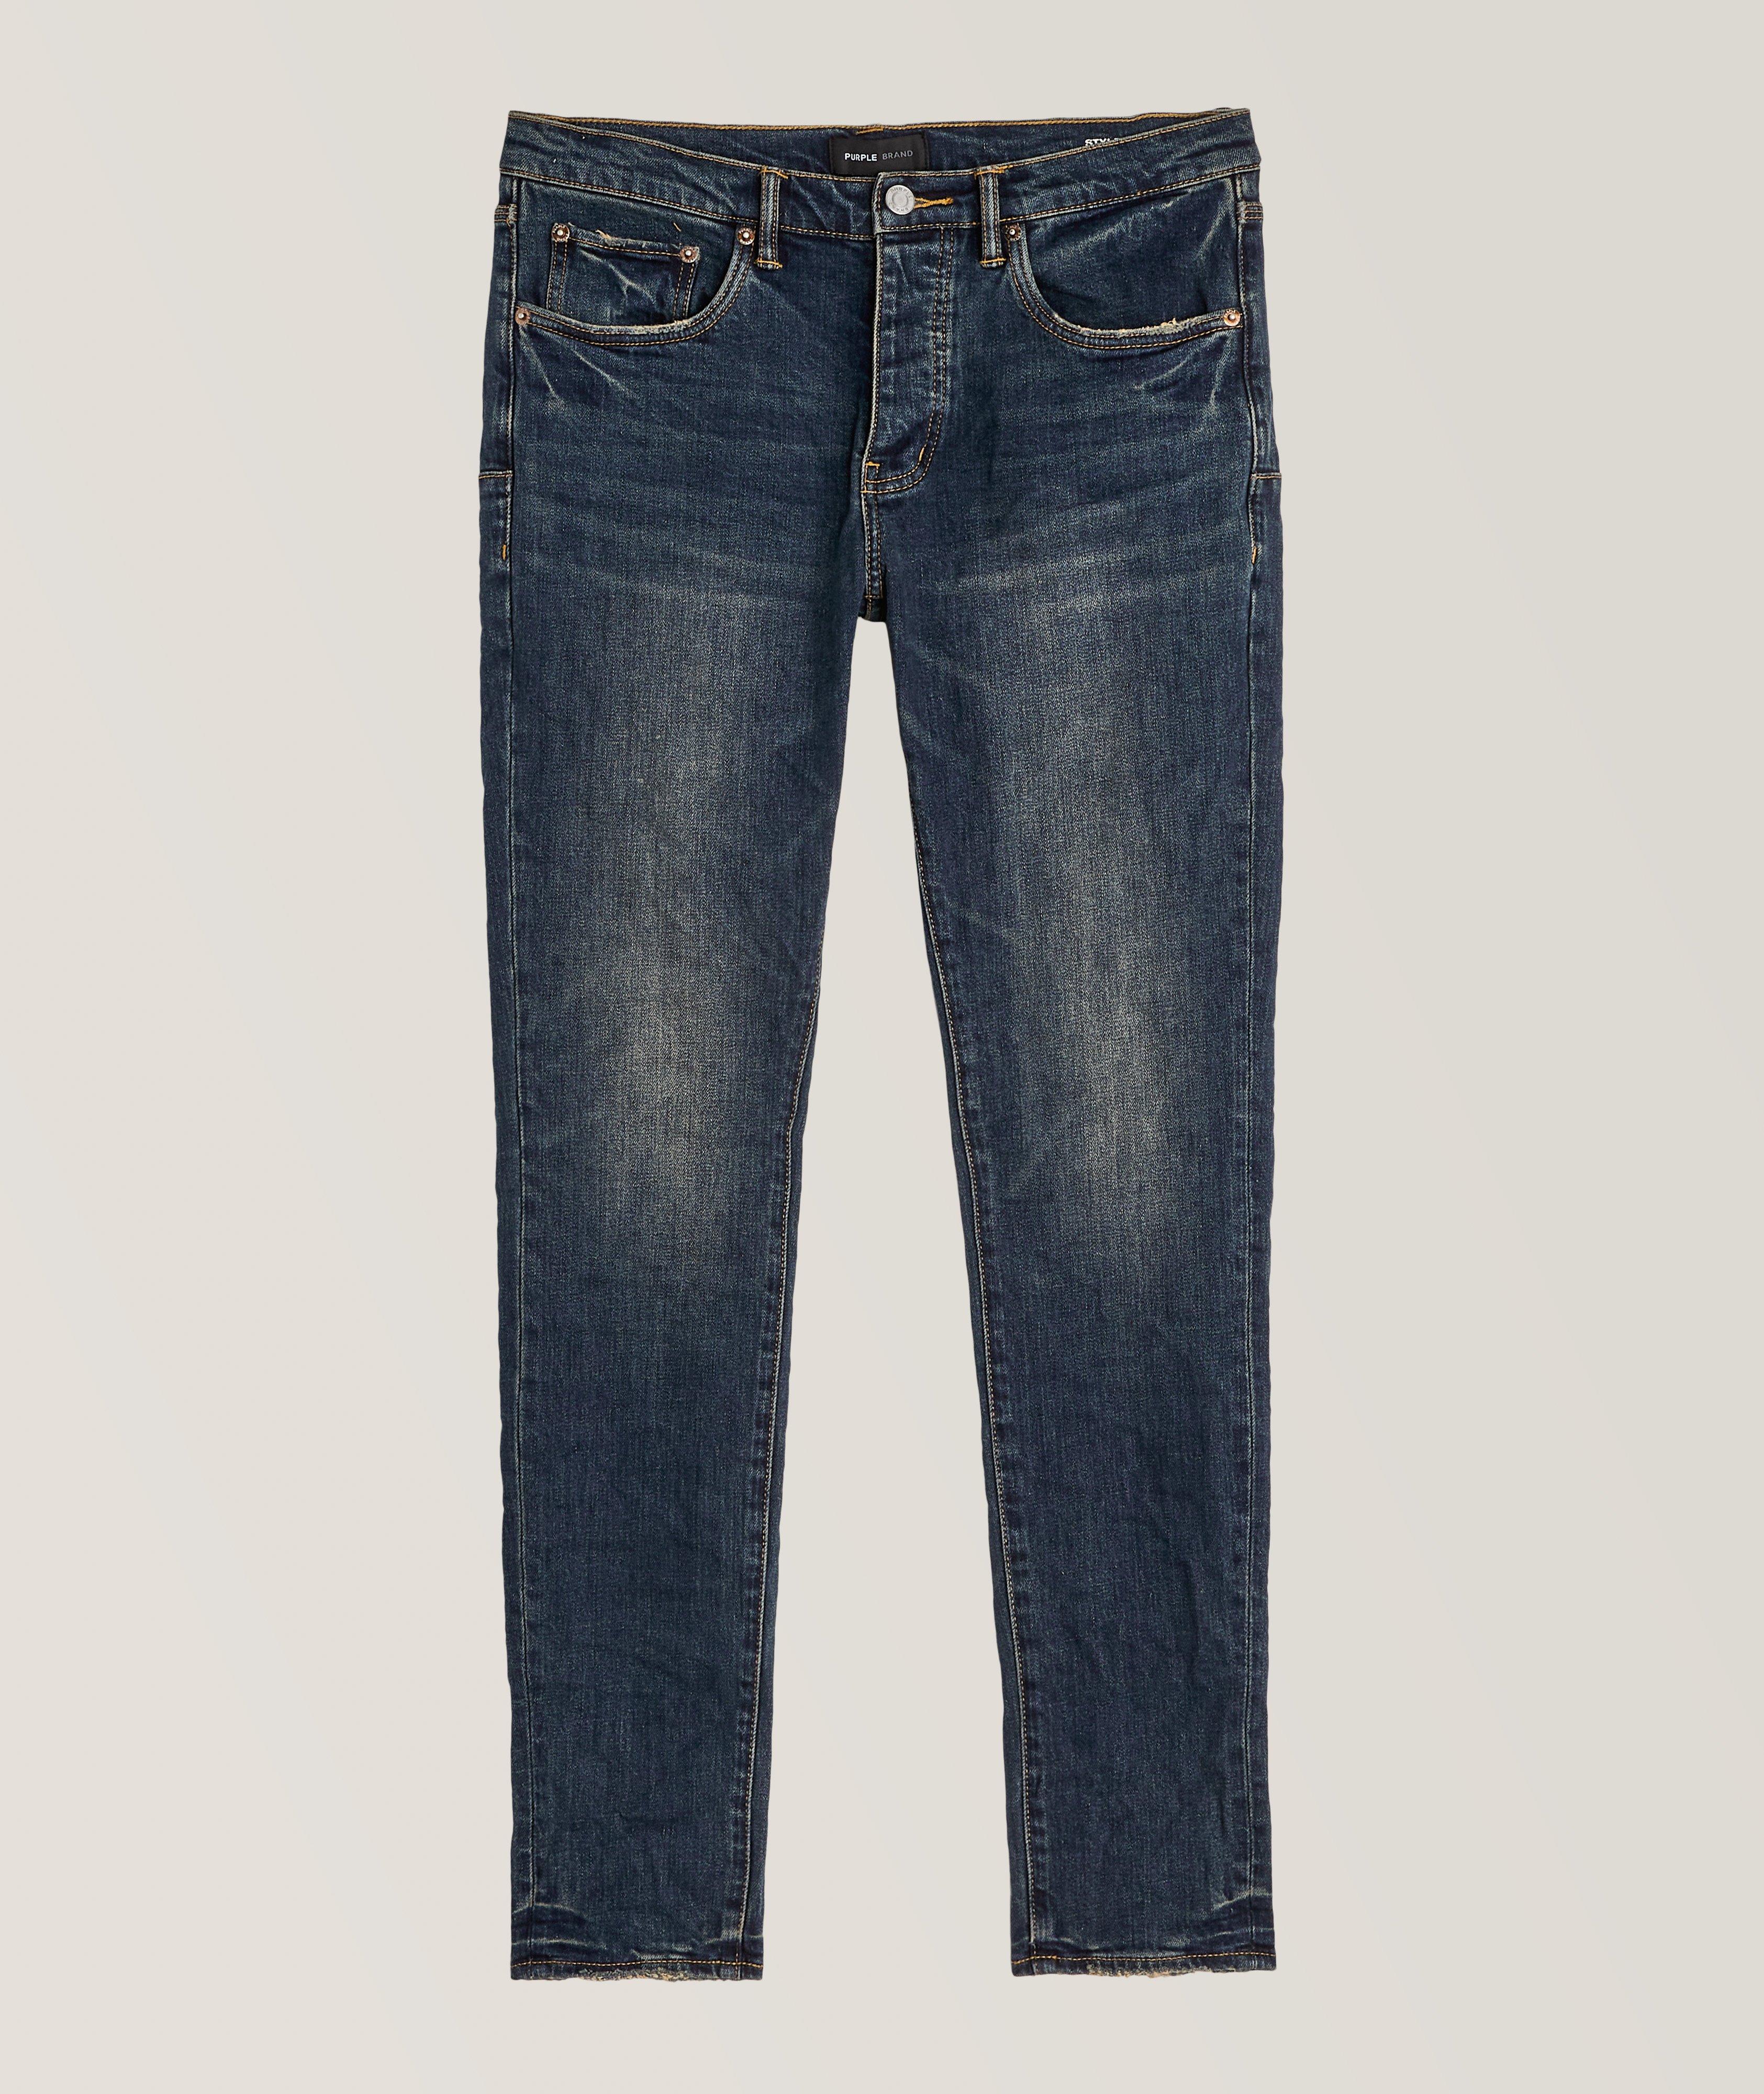 $345 Purple Brand Men's Blue Distressed Stretch Denim Jeans Pants Size 30